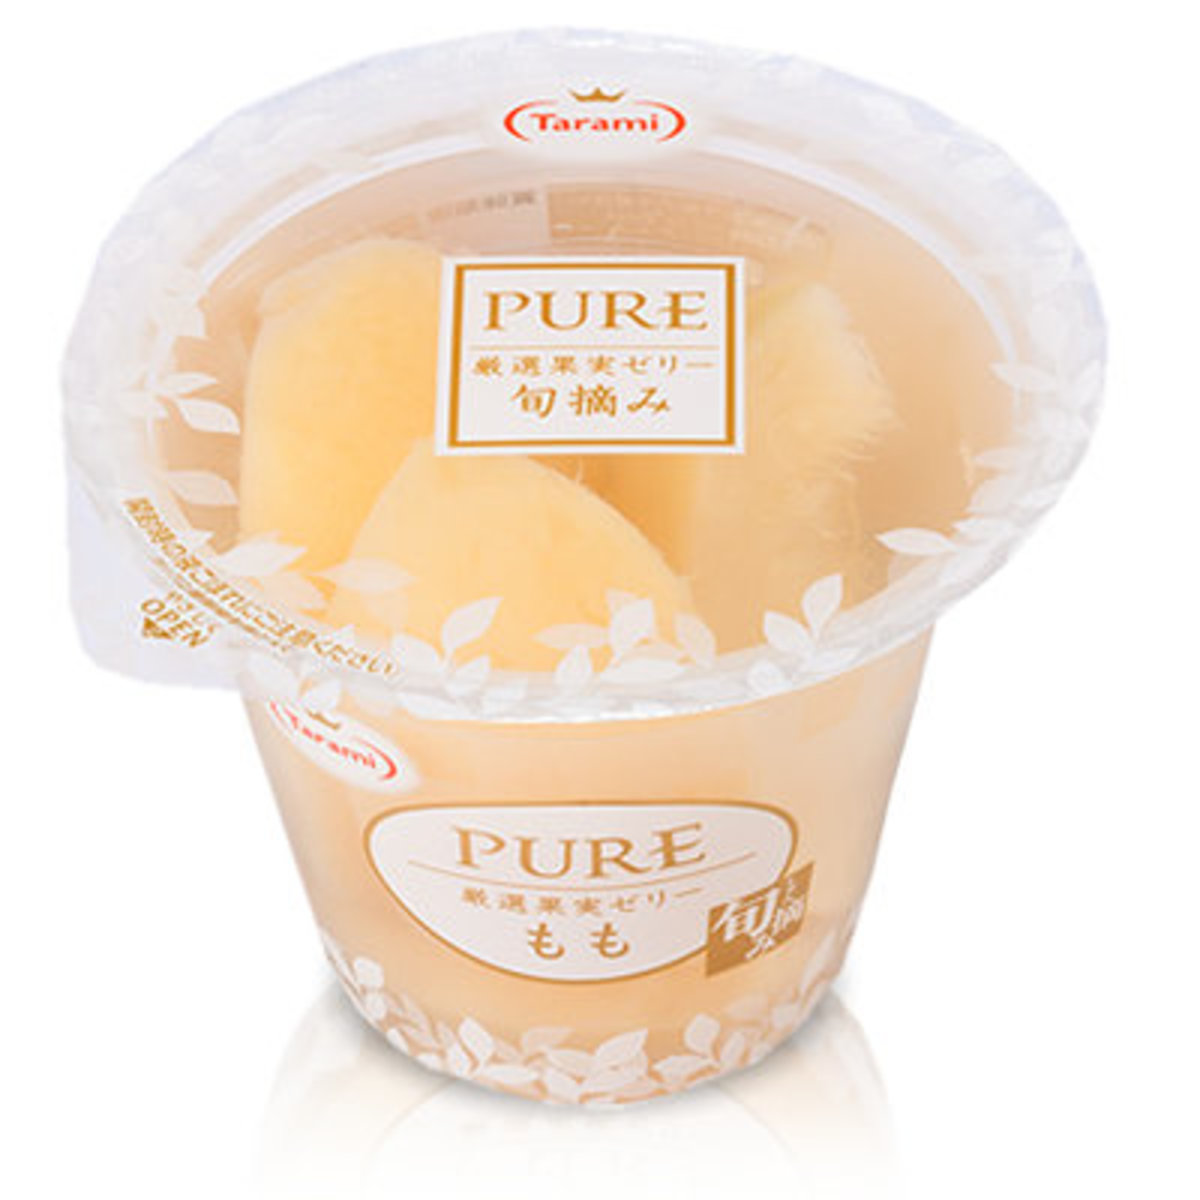 Tarami Pure Peach Jelly 270g Hktvmall Online Shopping